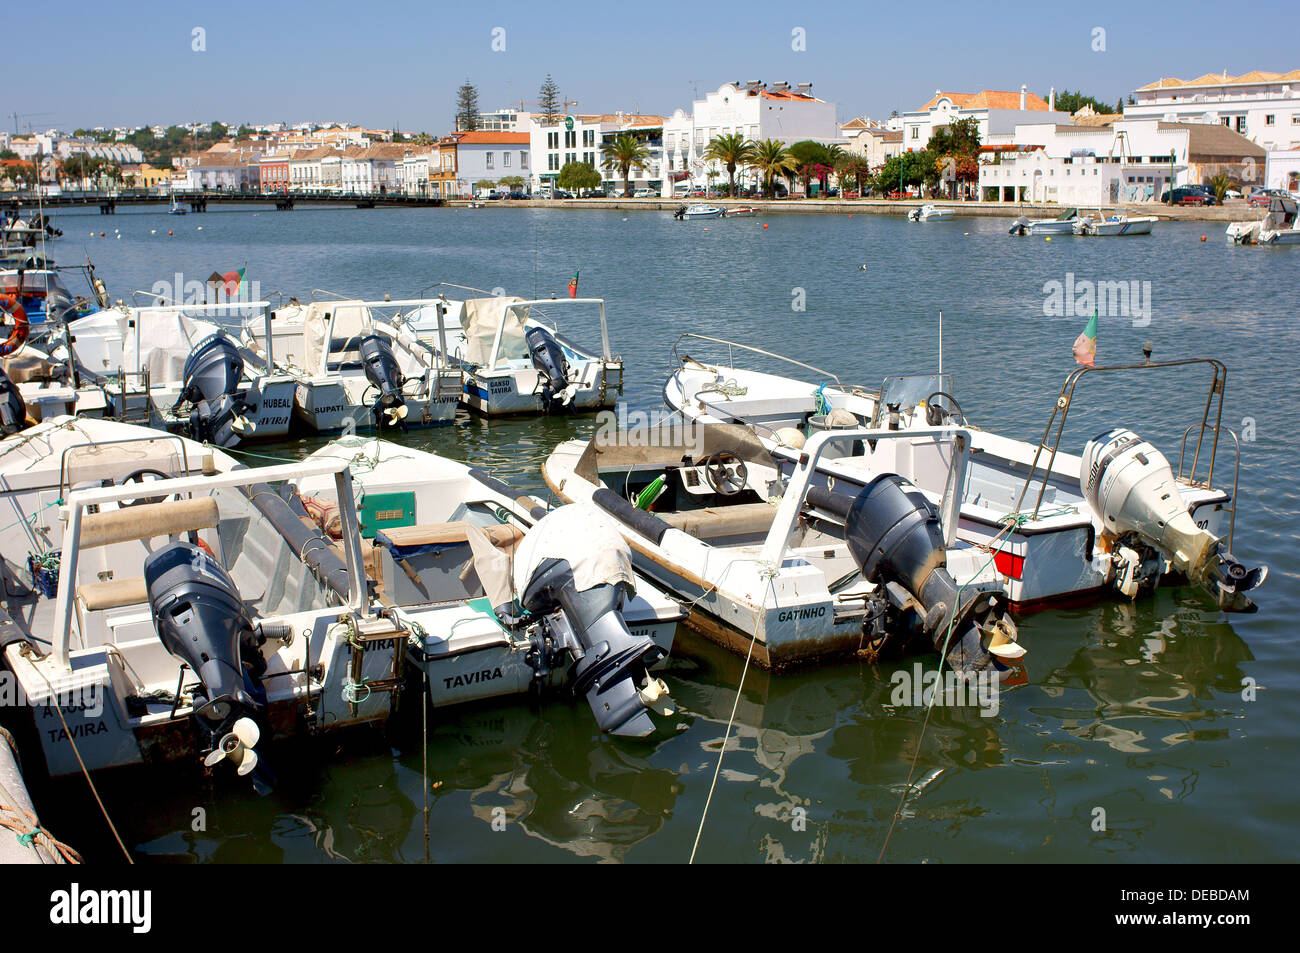 Motor boats on the River Rio Gilao Tavira Algarve Portugal Stock Photo